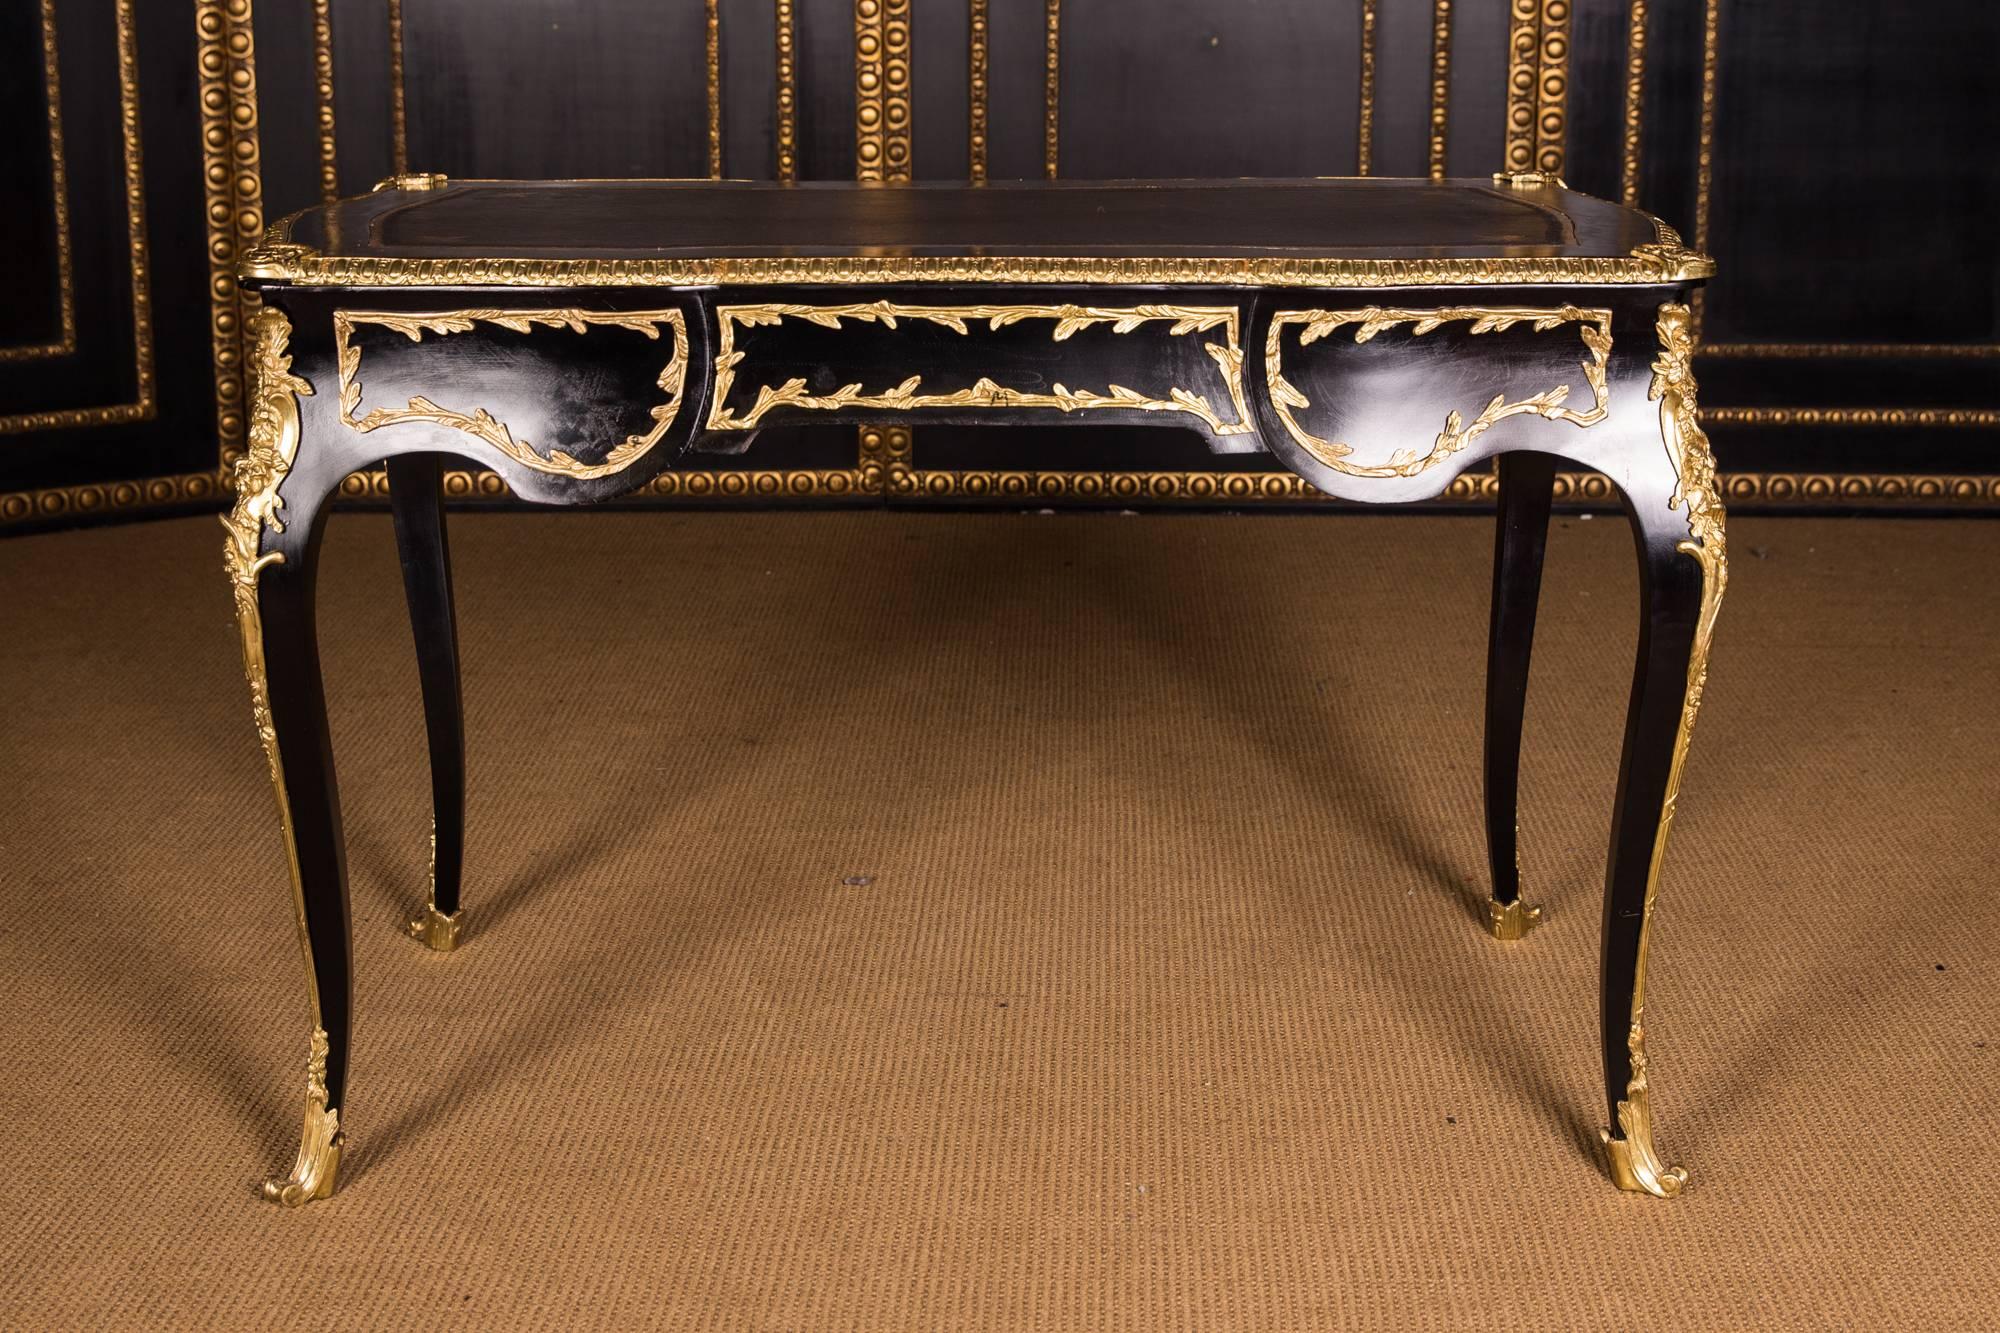 20th Century French Bureau Plat Desk in the Louis XV Style Black Ebonized Veneer 4